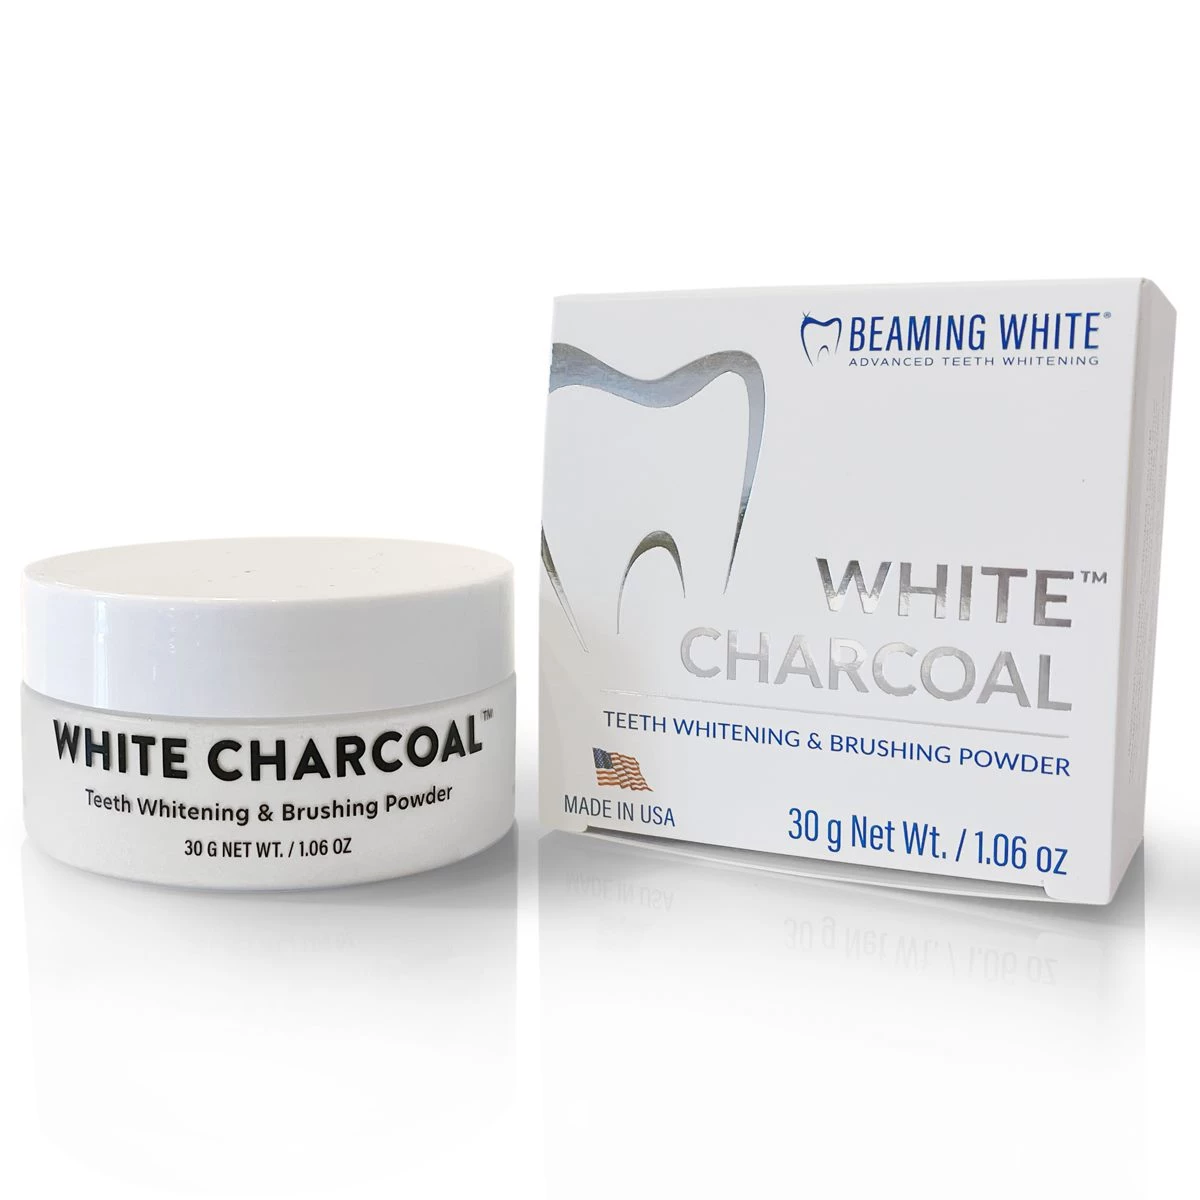 White Charcoal™ Teeth Whitening Powder